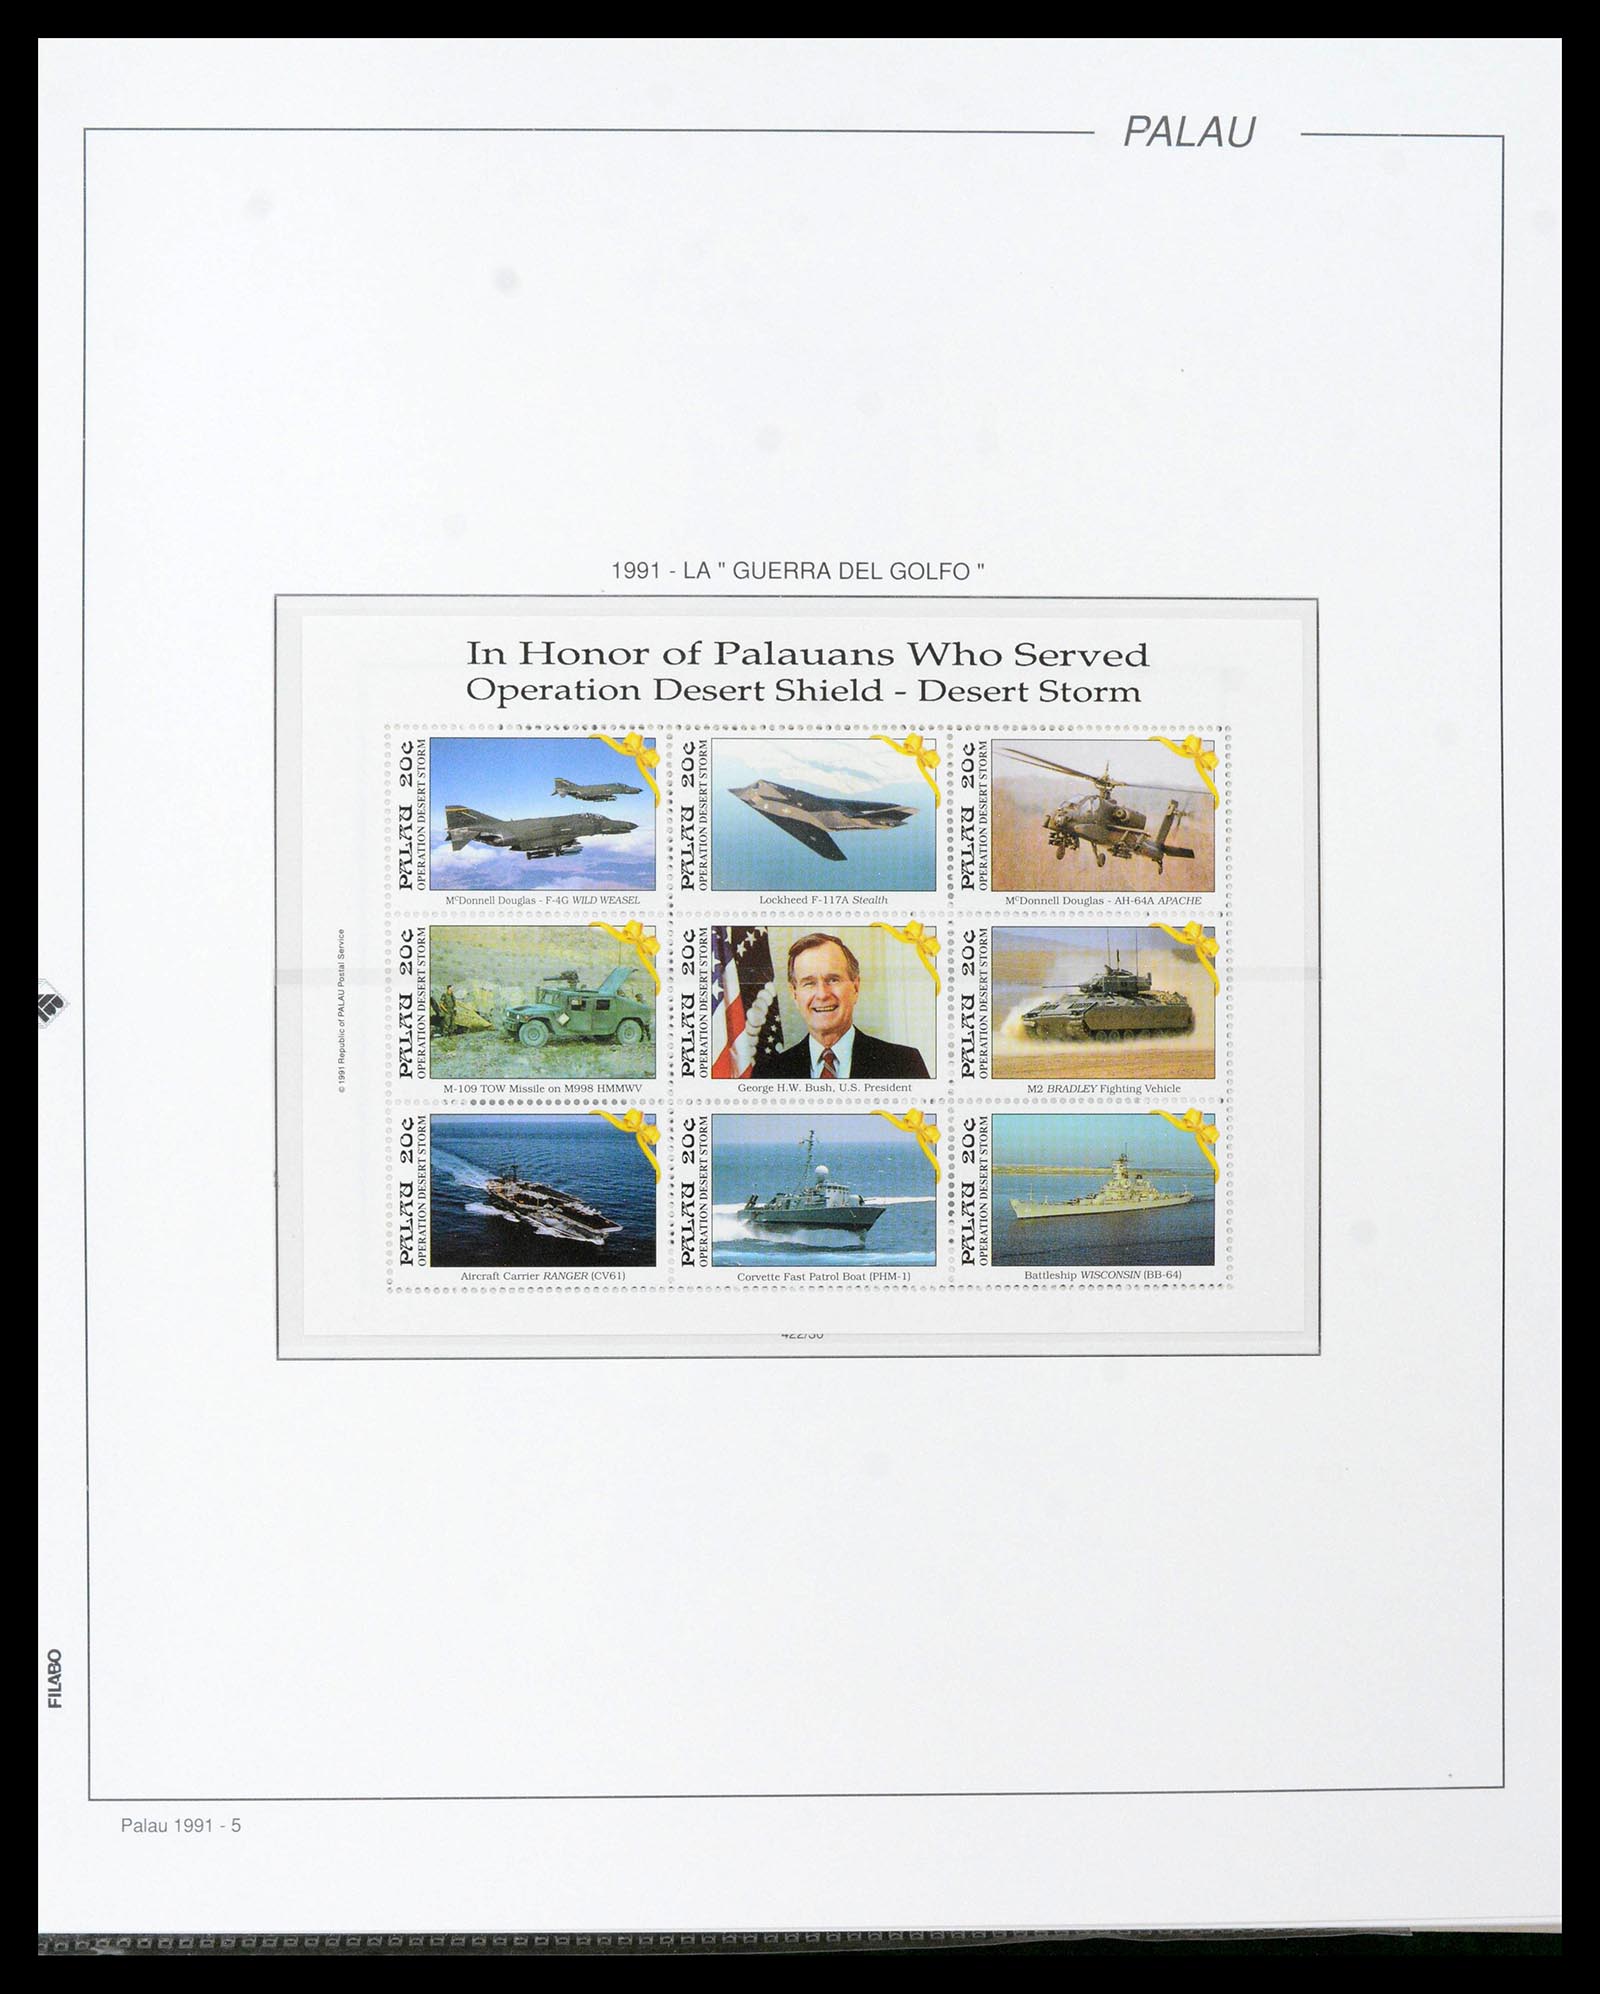 39222 0044 - Stamp collection 39222 Palau, Micronesia and Marshall islands 1980-1995.